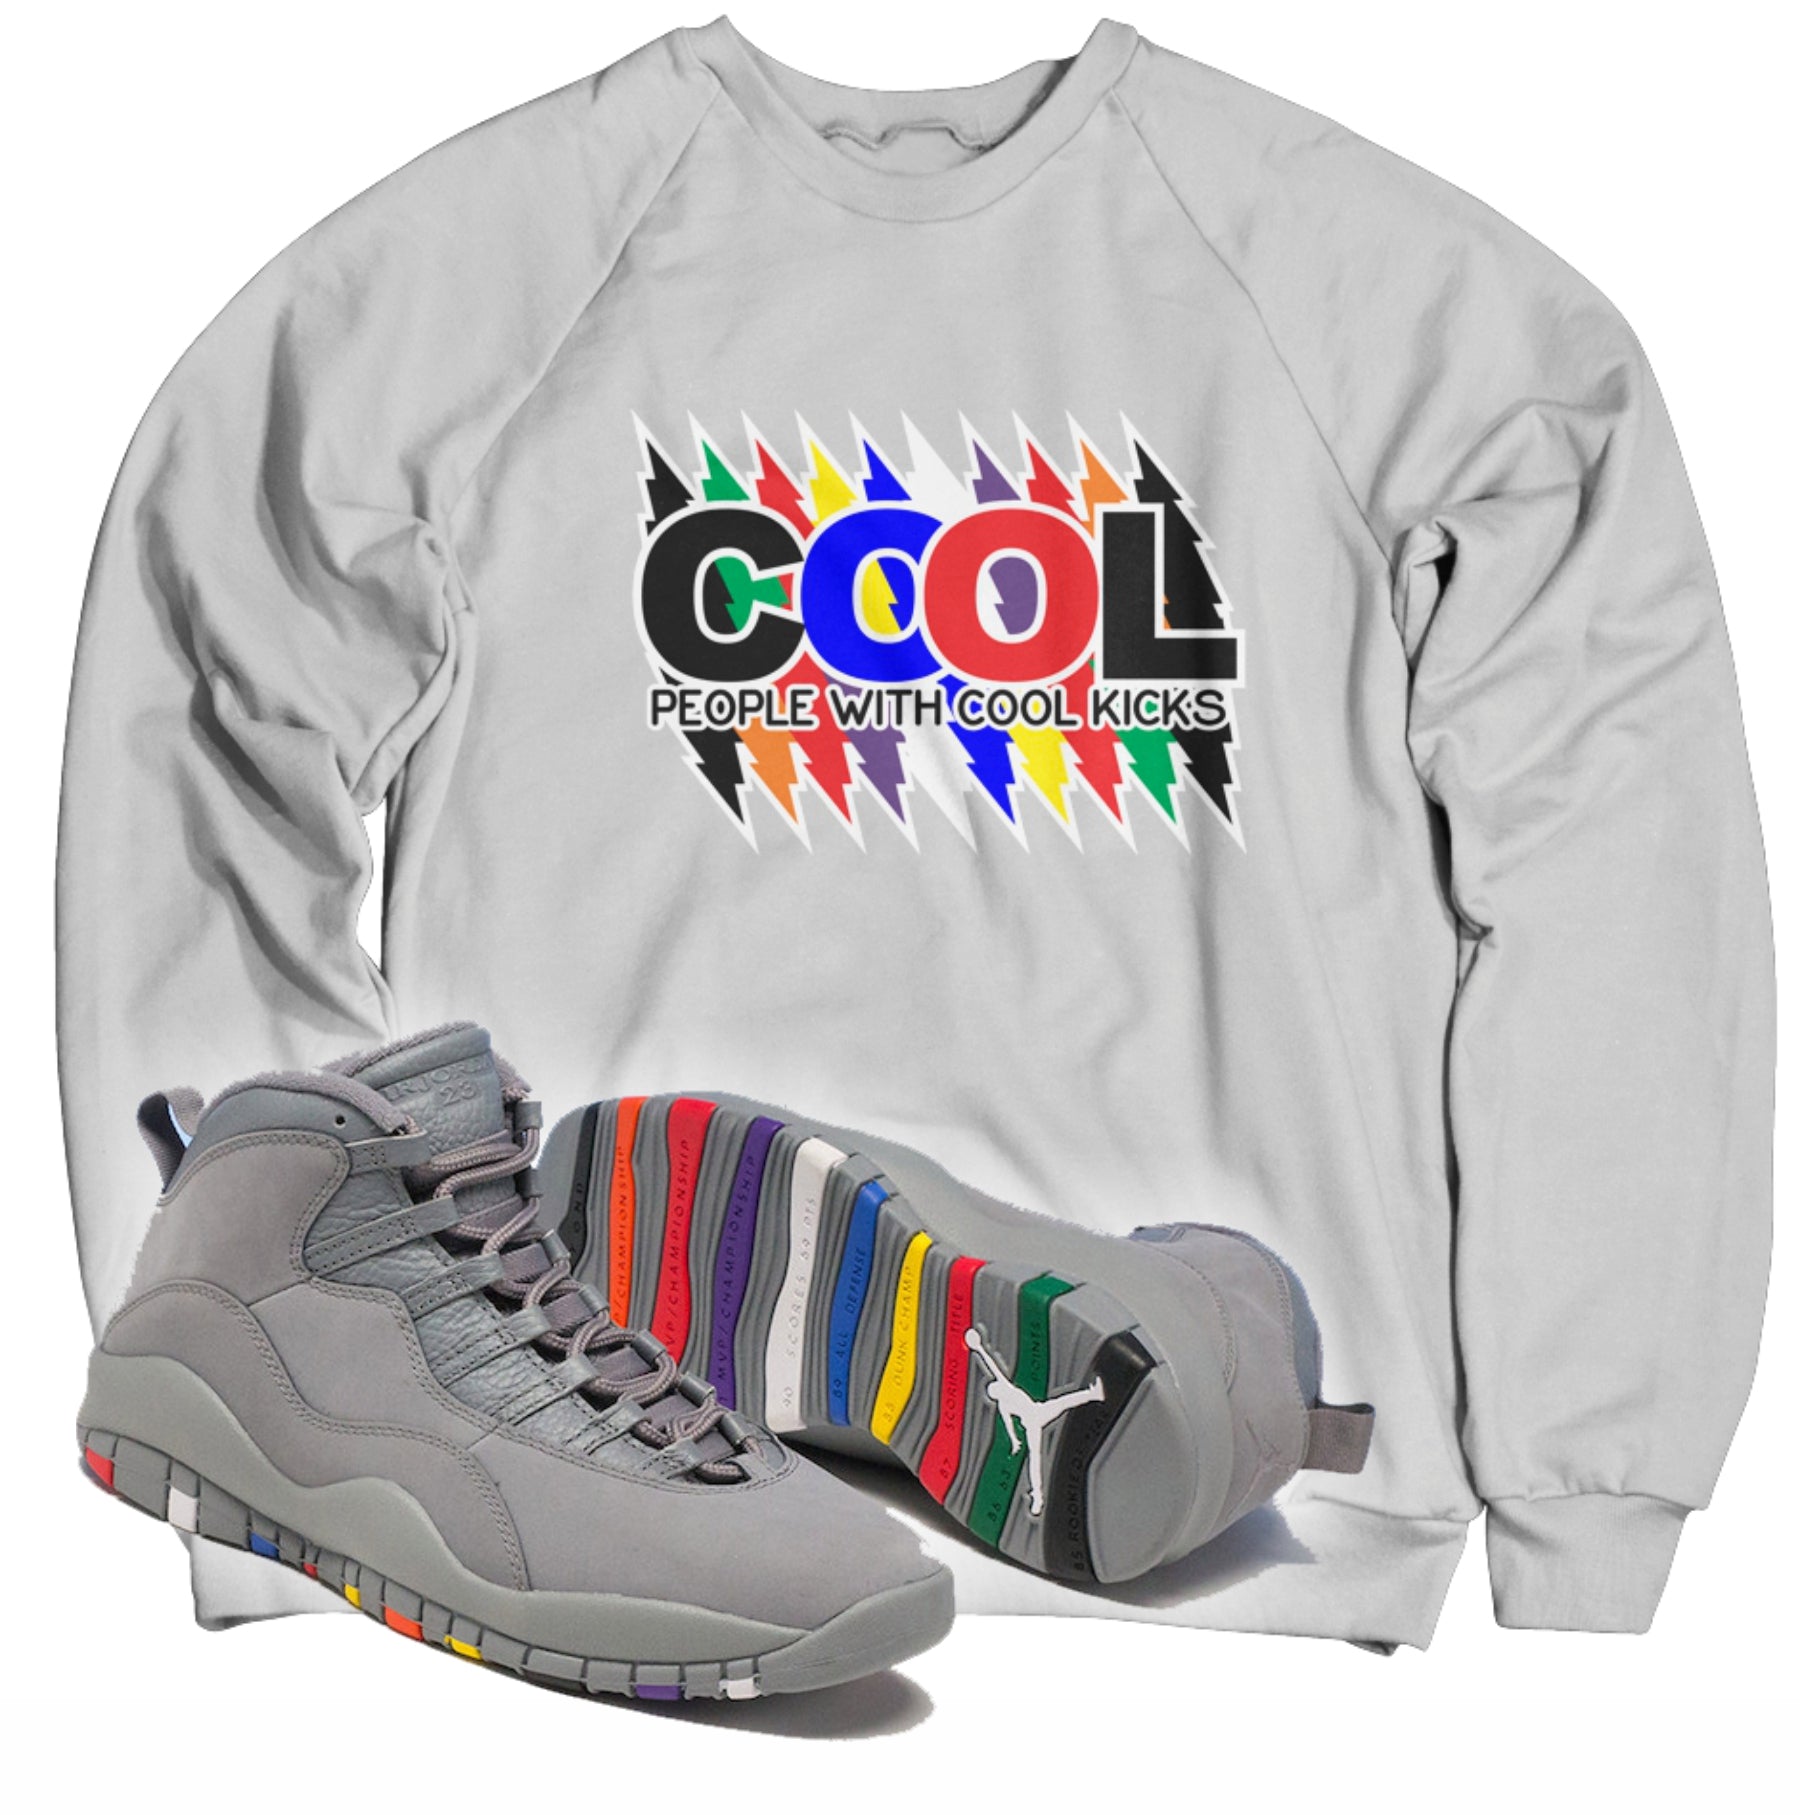 cool grey sneakers